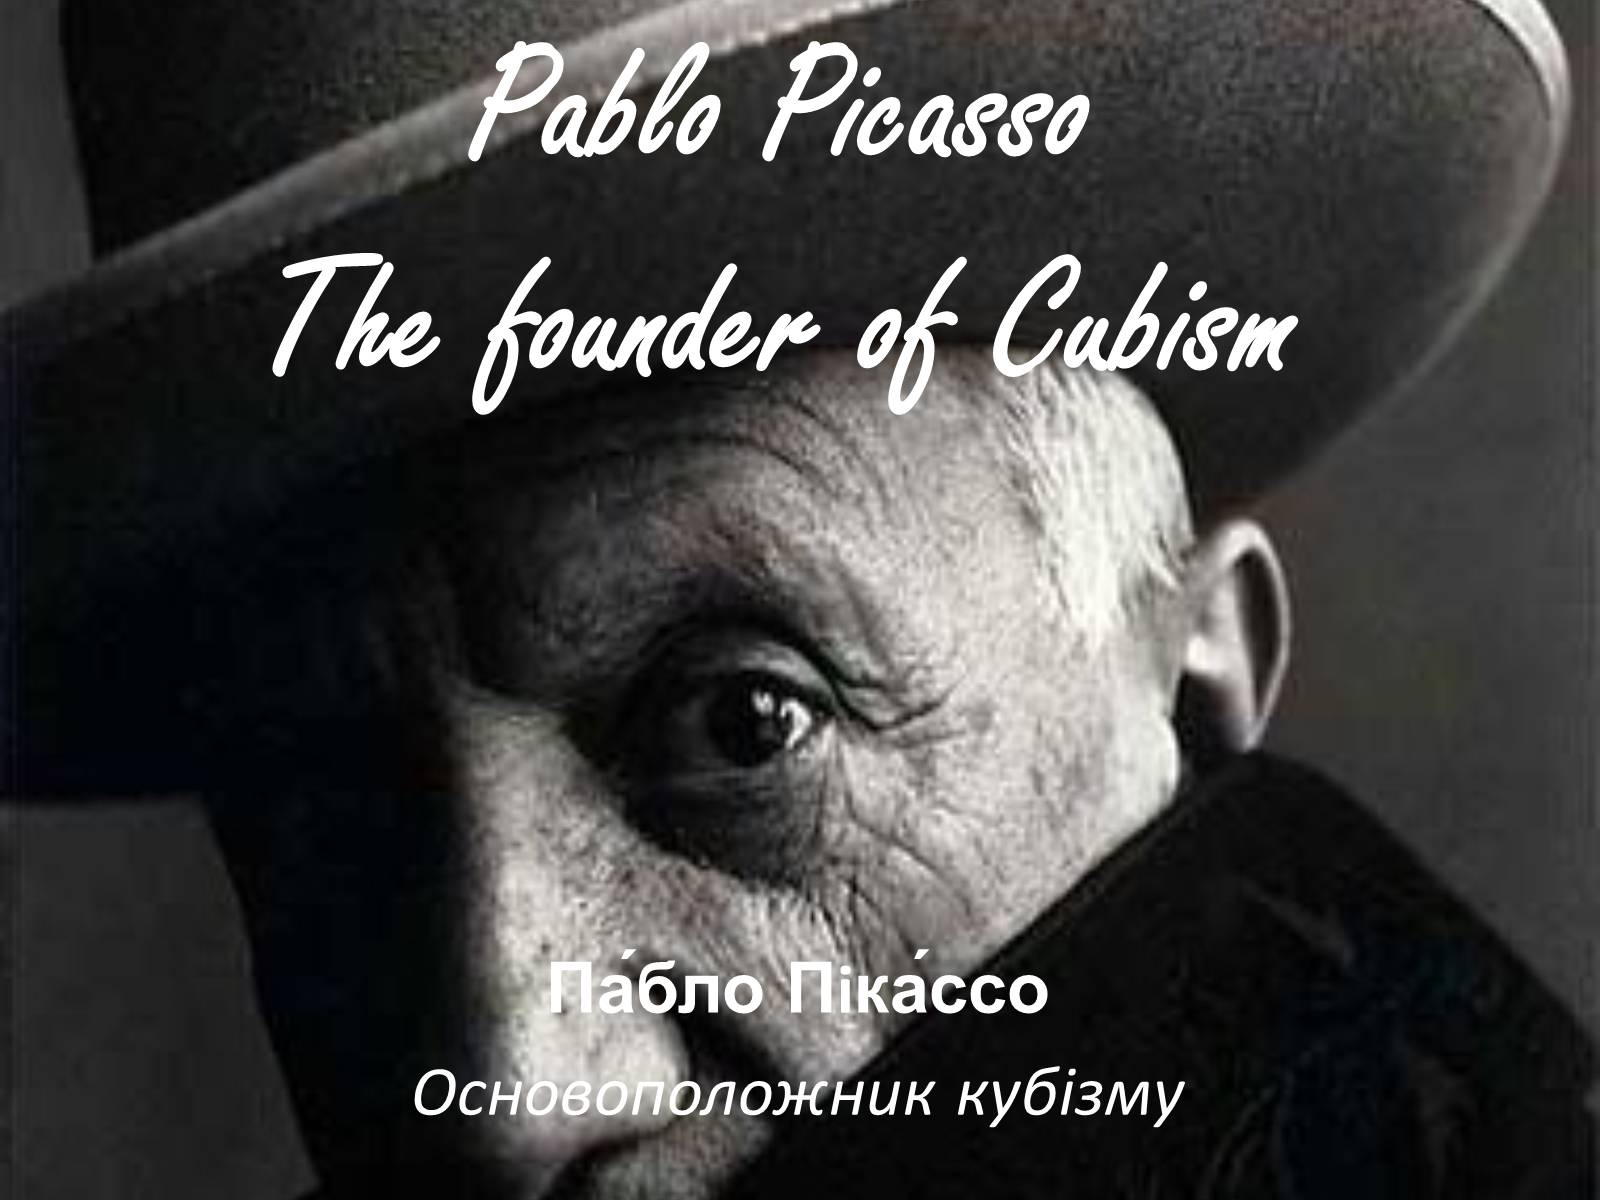 Презентація на тему «Pablo Picasso The founder of Cubism» - Слайд #1